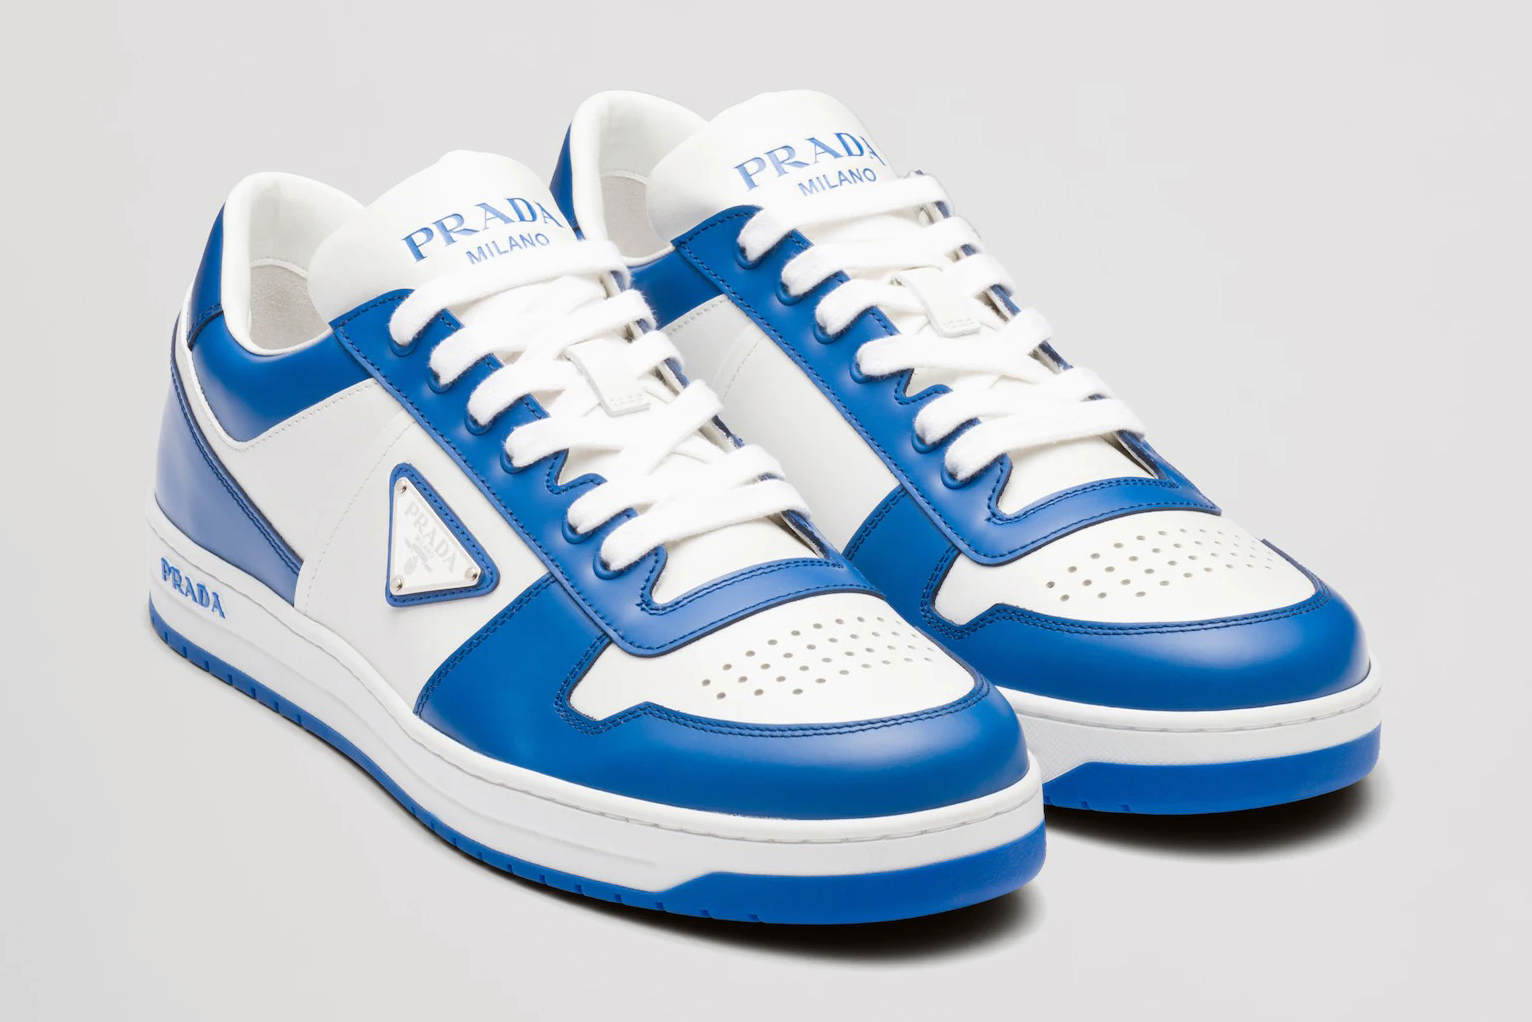 Prada Shoes Milano Women’s Sport White Low Top Vintage Sneakers Size 10 Us